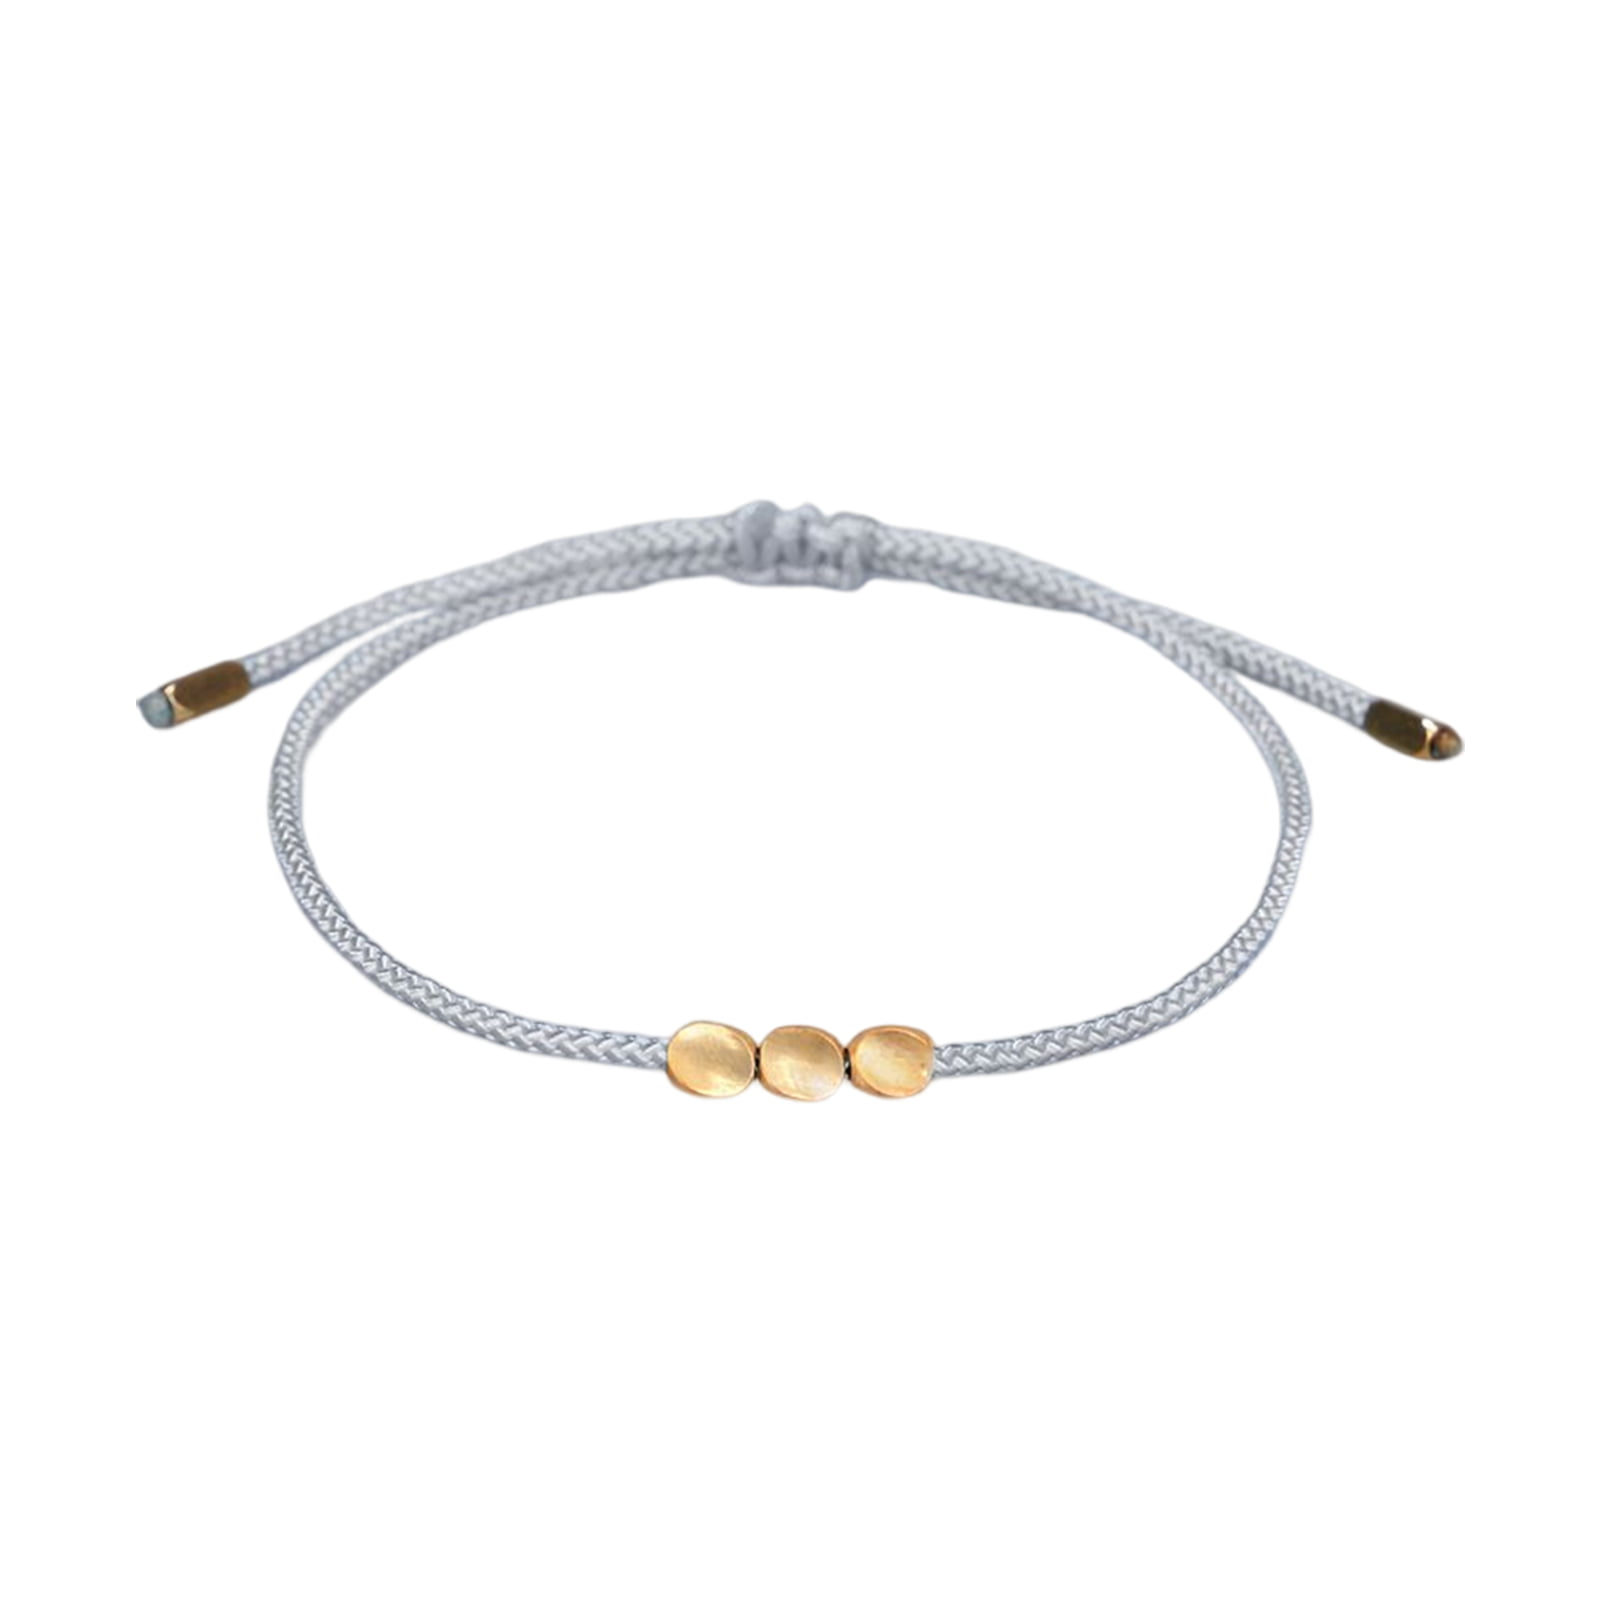 Anvazise Friendship Bracelet with Charms Adjustable Handmade Temperament  Ornamental Decorate Accessories Unisex Handmade Braided Bracelet for Daily